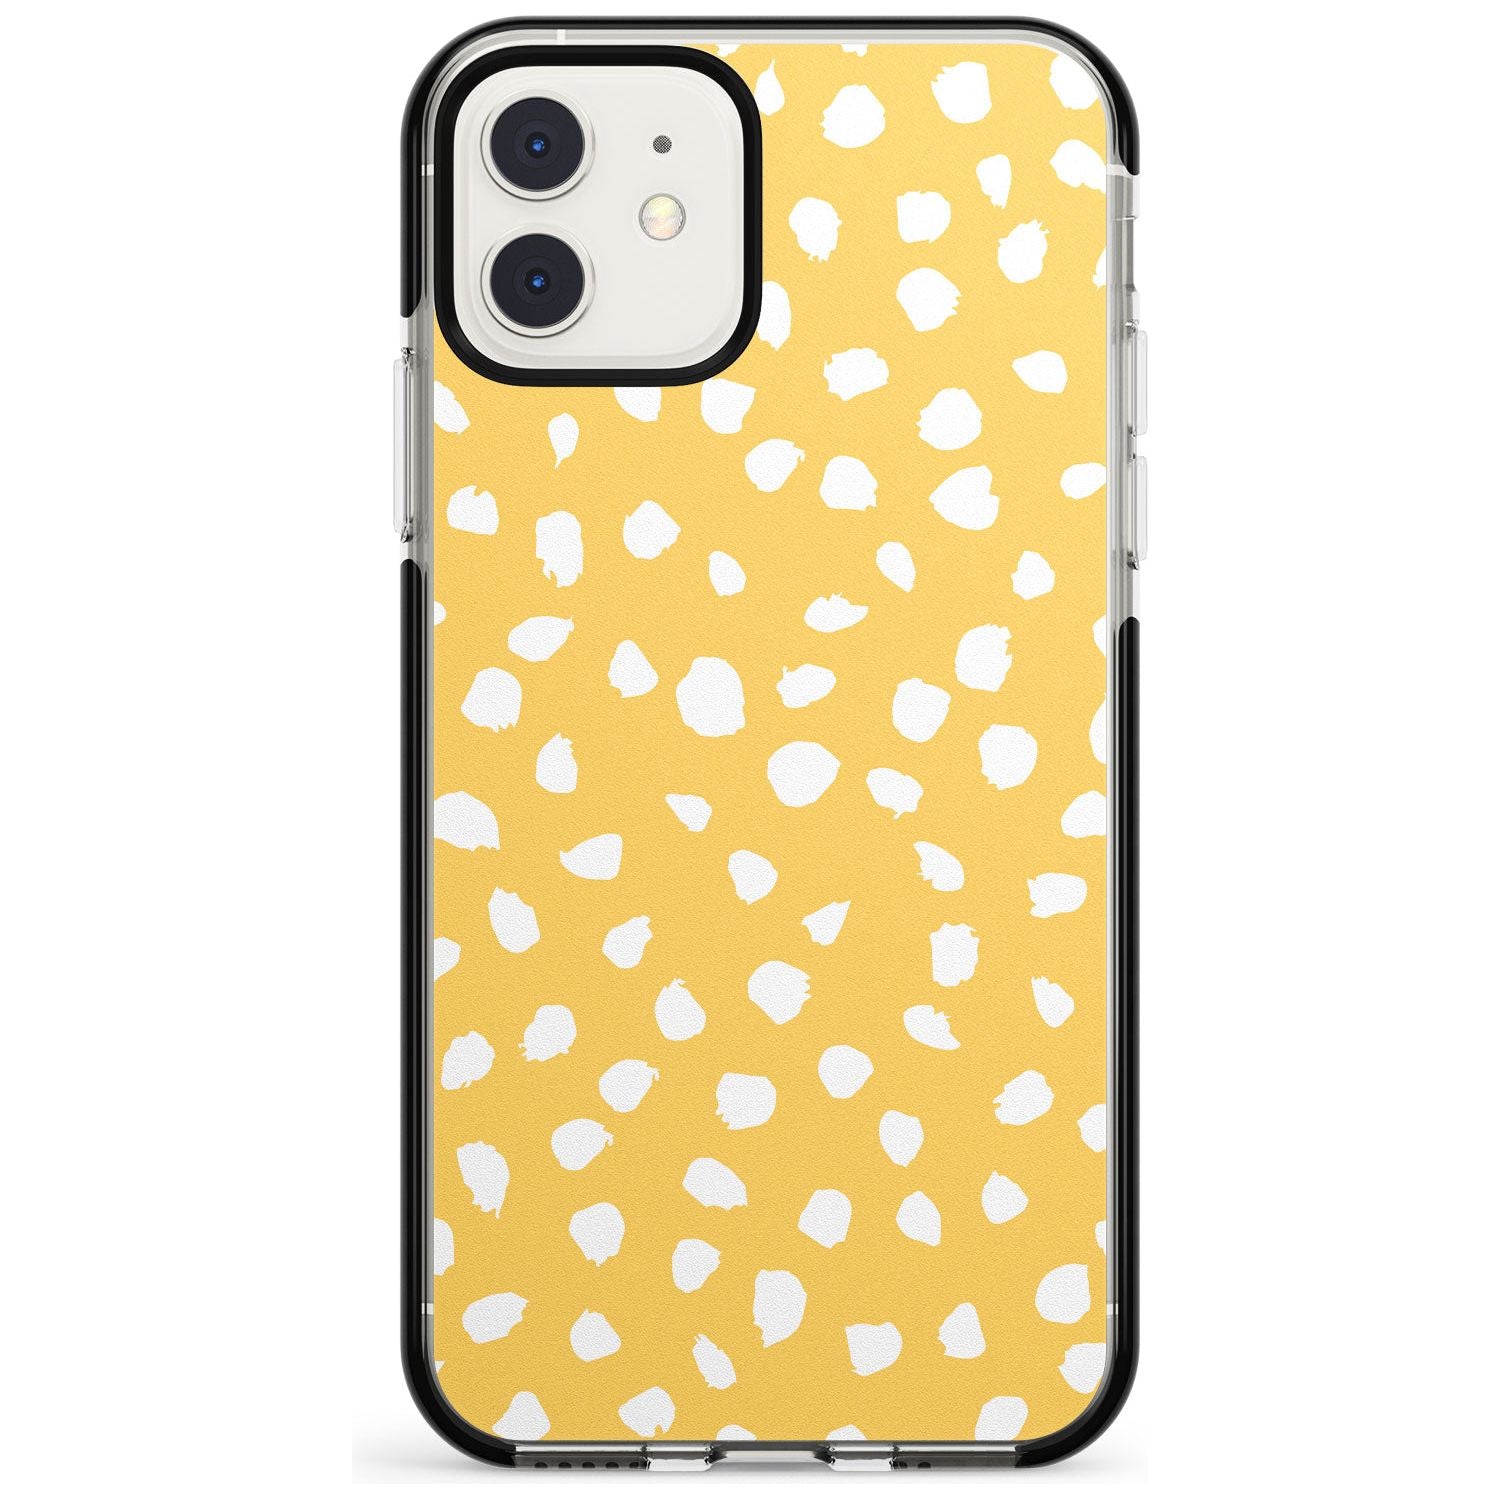 White on Yellow Dalmatian Polka Dot Spots Black Impact Phone Case for iPhone 11